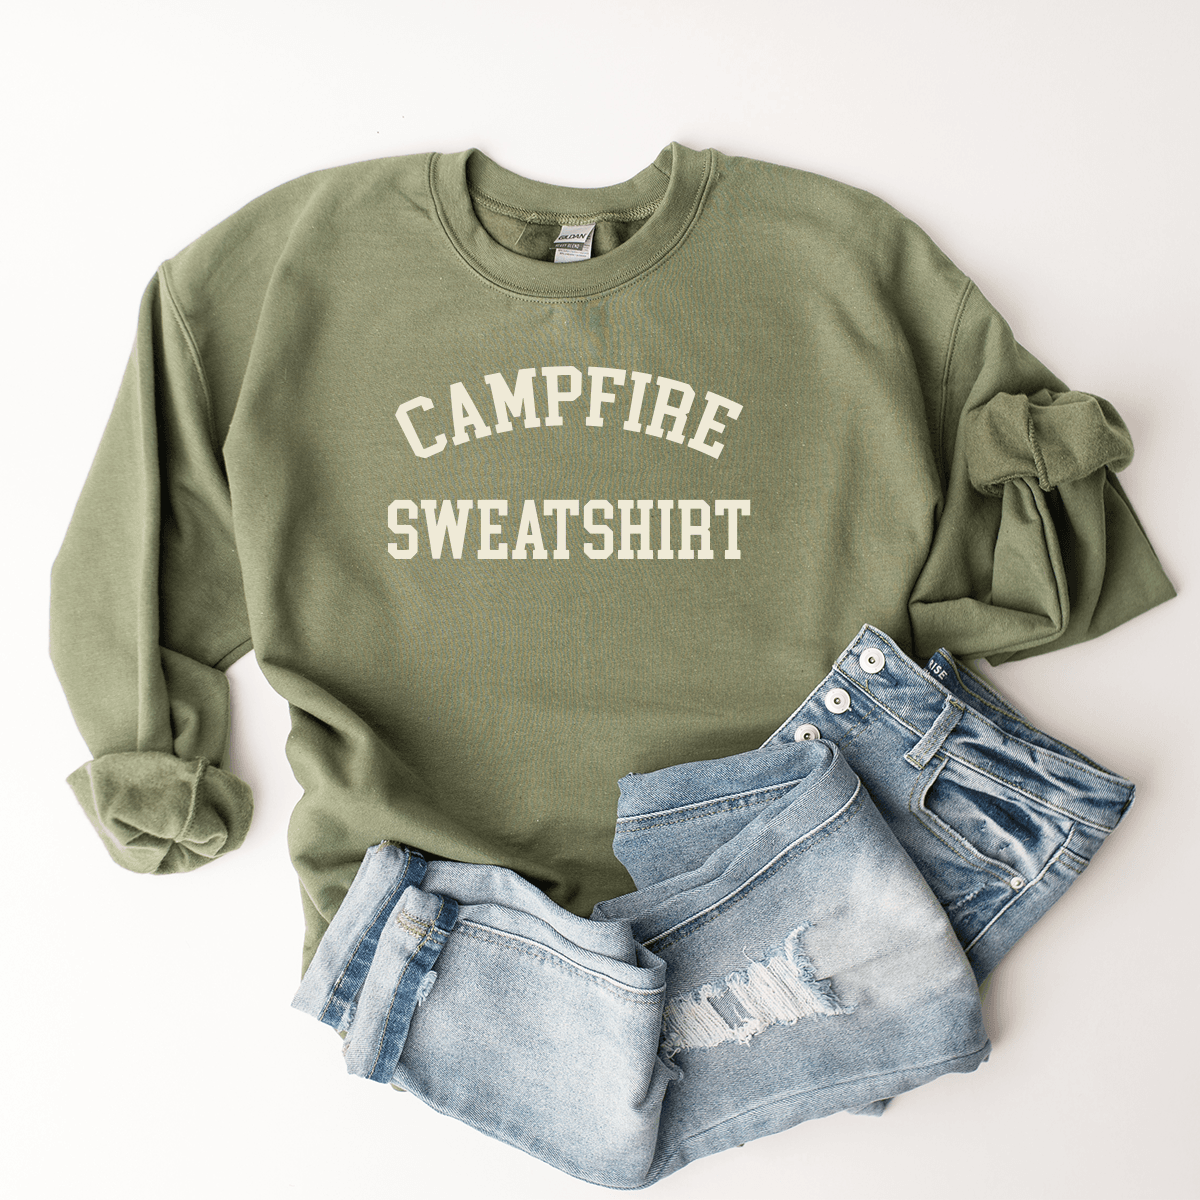 Campfire Sweatshirt - Sweatshirt